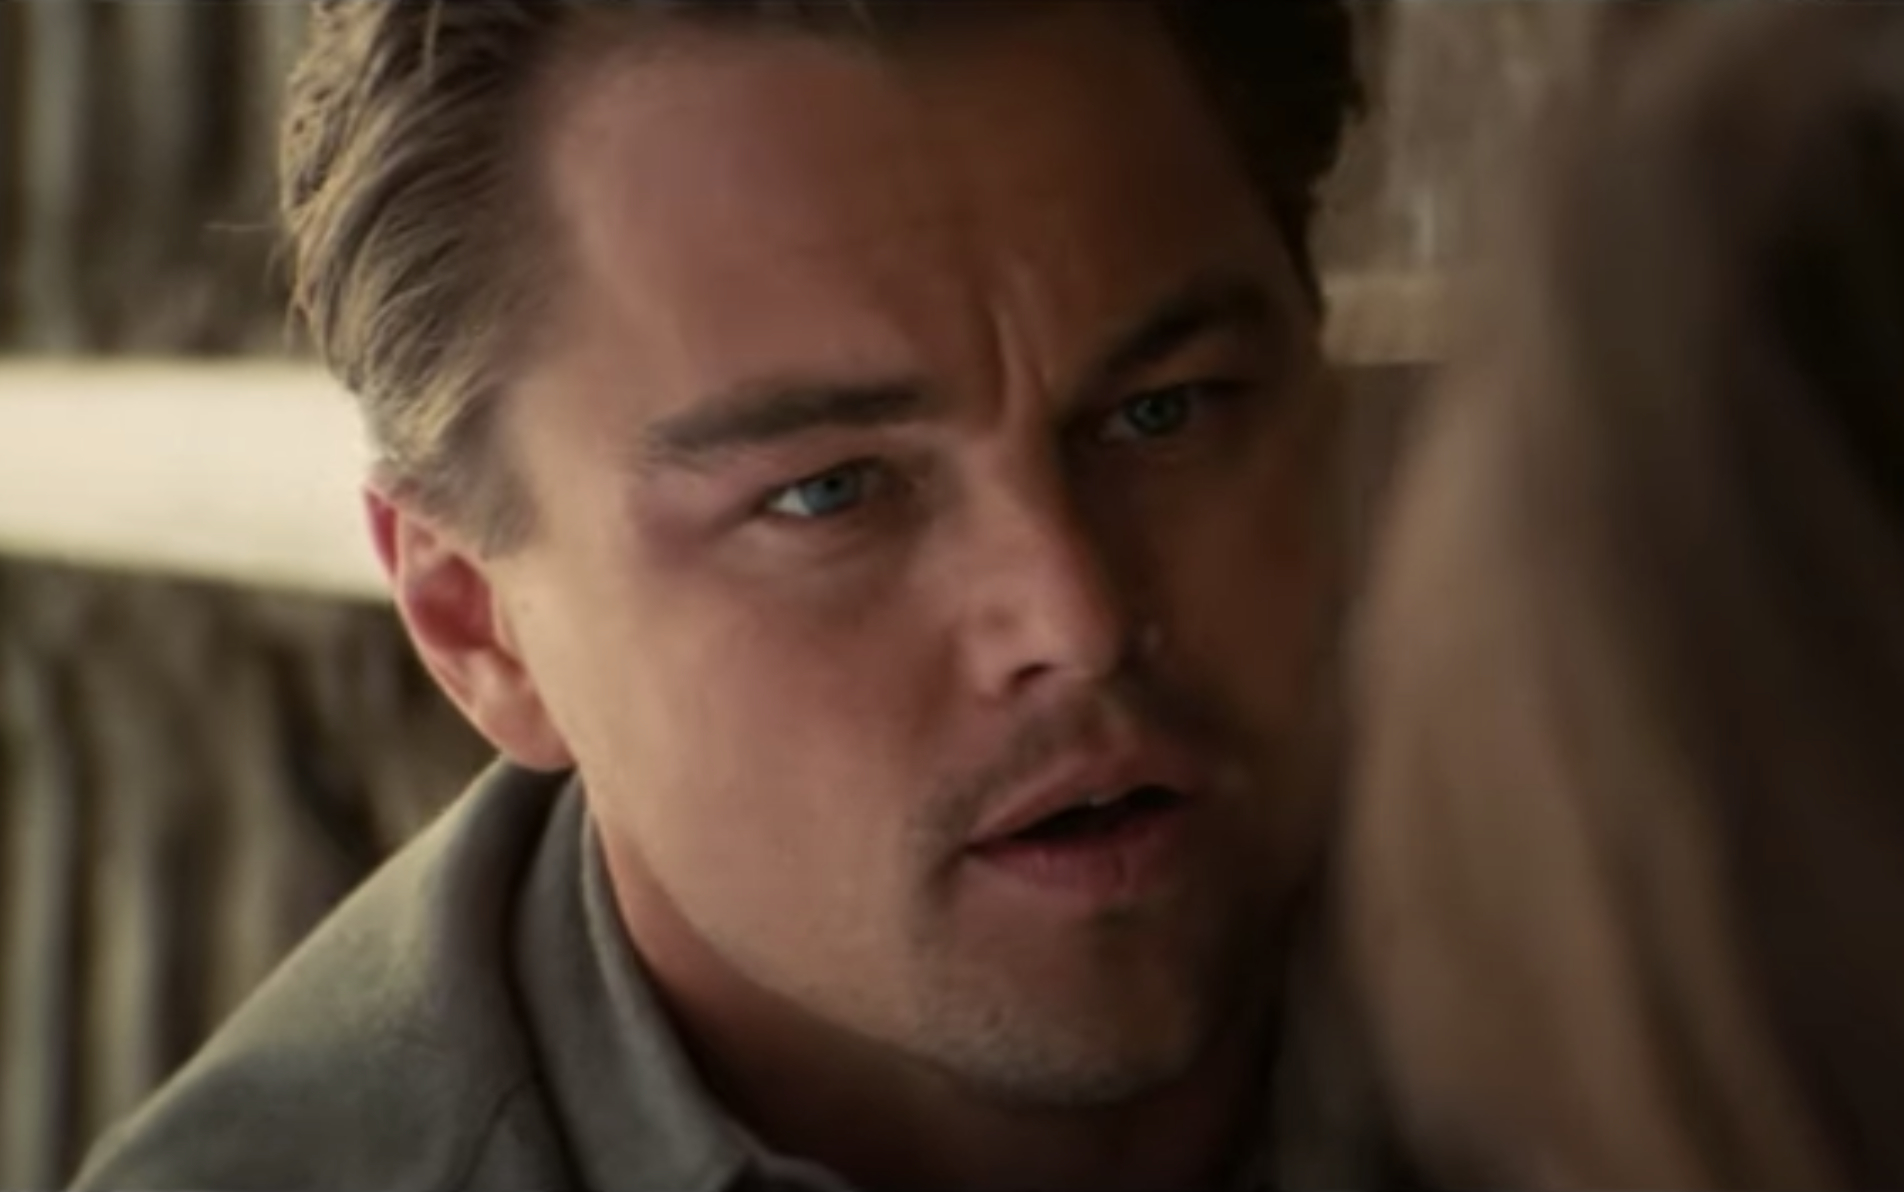 A close-up of Leonardo in the movie